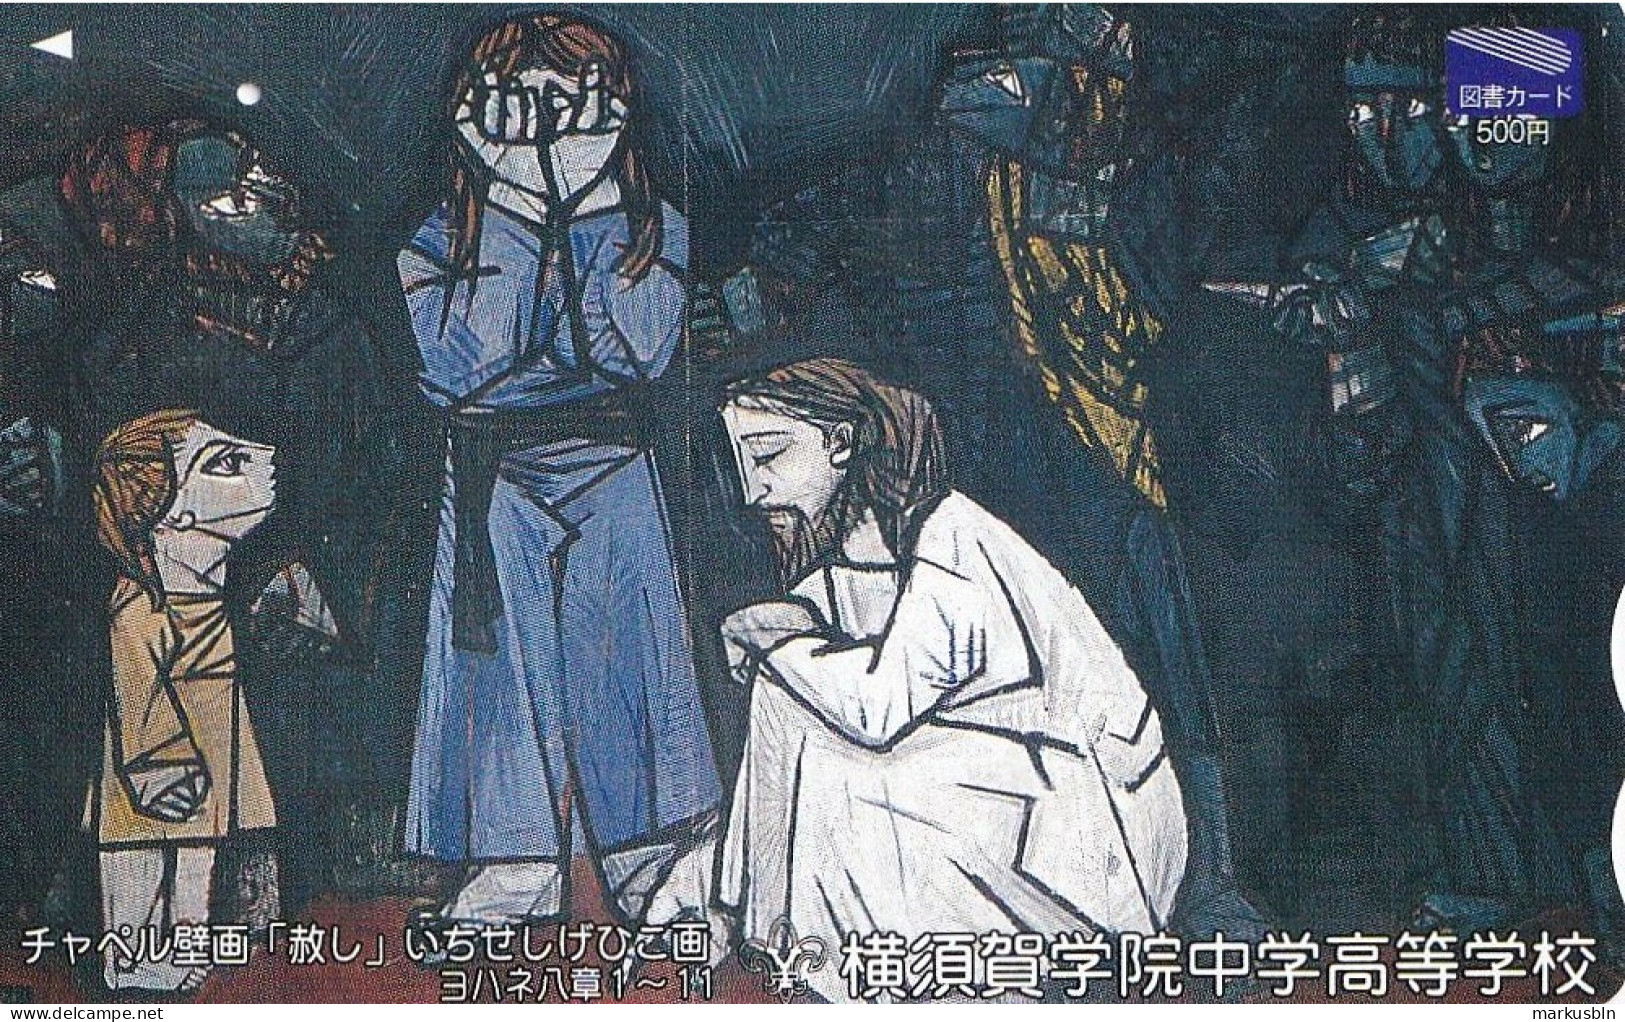 Japan Prepaid Libary Card 500 - Church Religion Art  Jesus - Japan